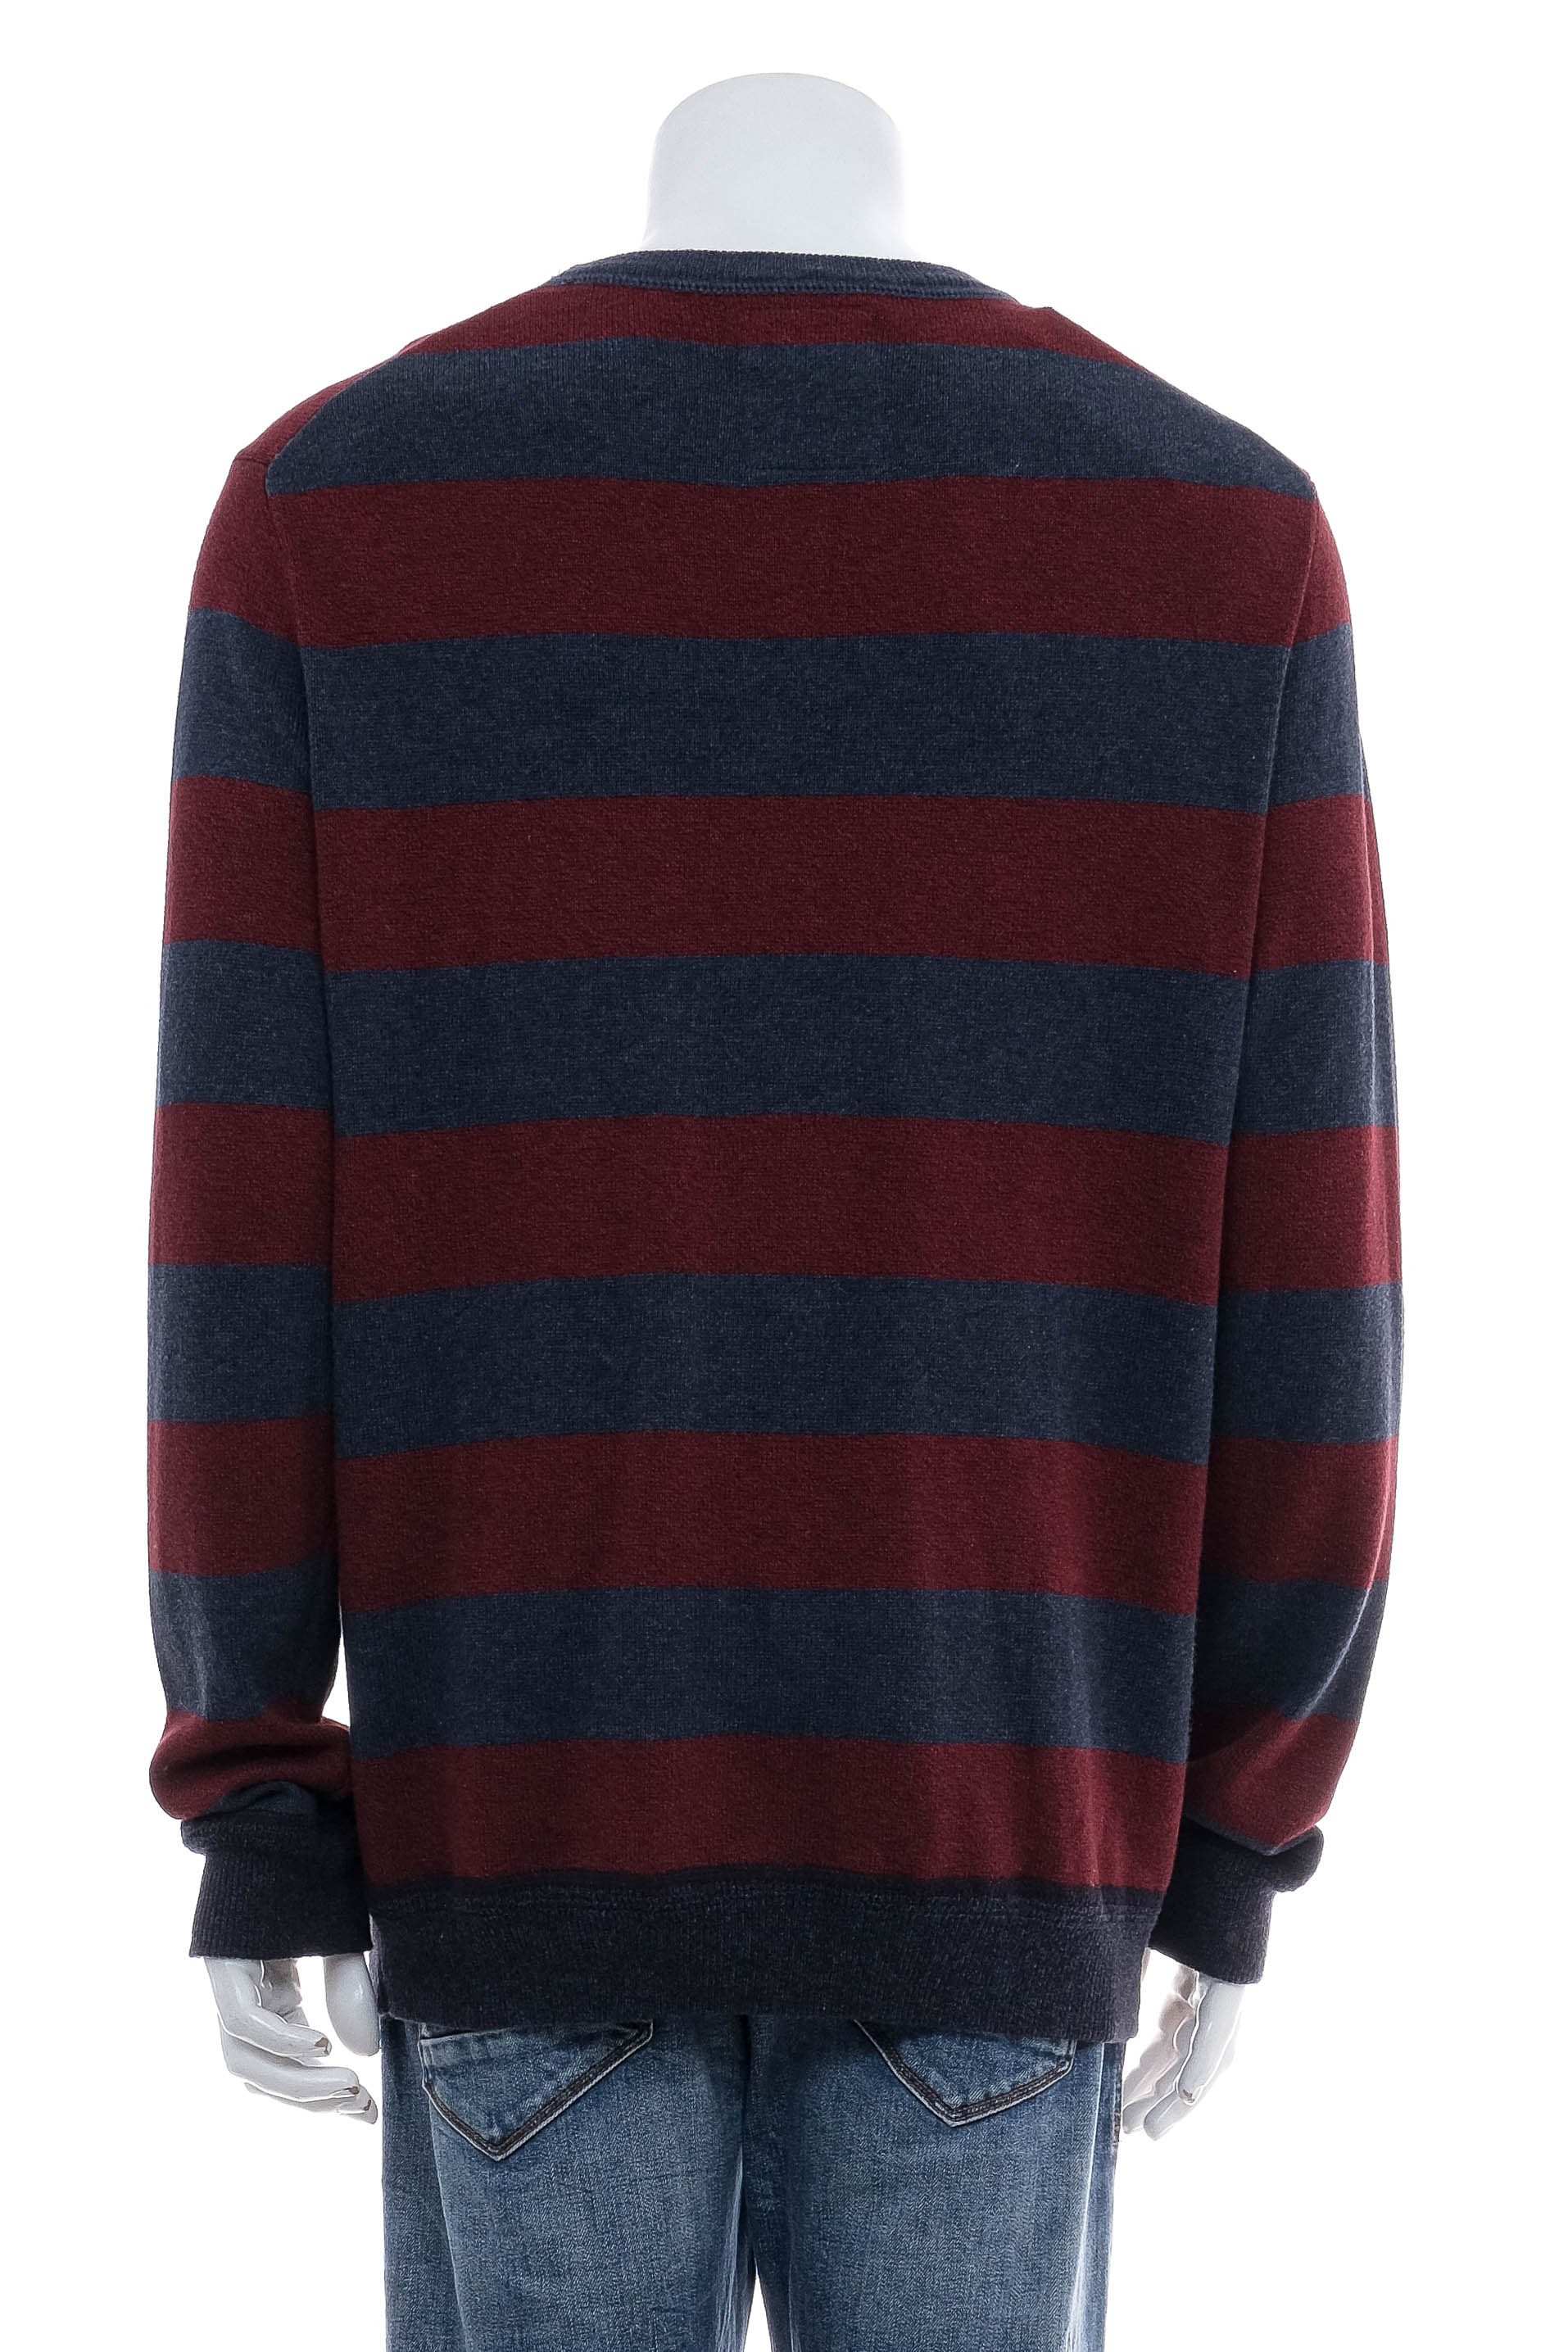 Men's sweater - American Eagle - 1